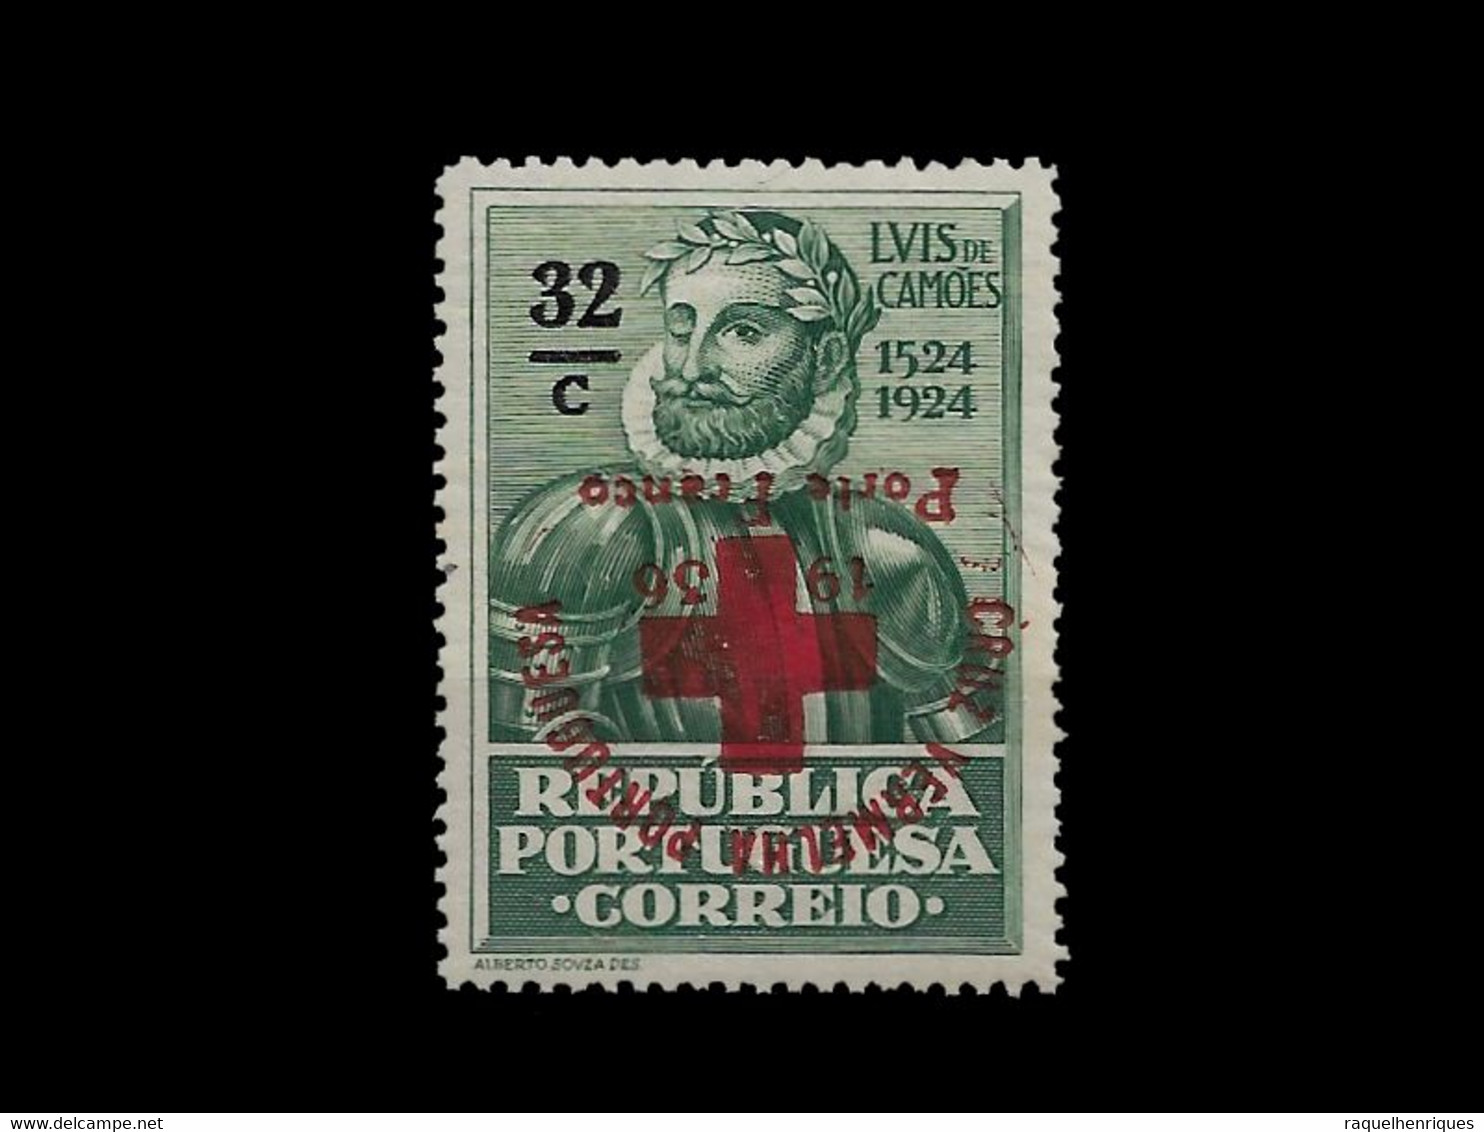 PORTUGAL PORTE FRANCO - 1936 ERROR UPSIDE DOWN SURCHARGED MNH (PLB#01-135) - Neufs